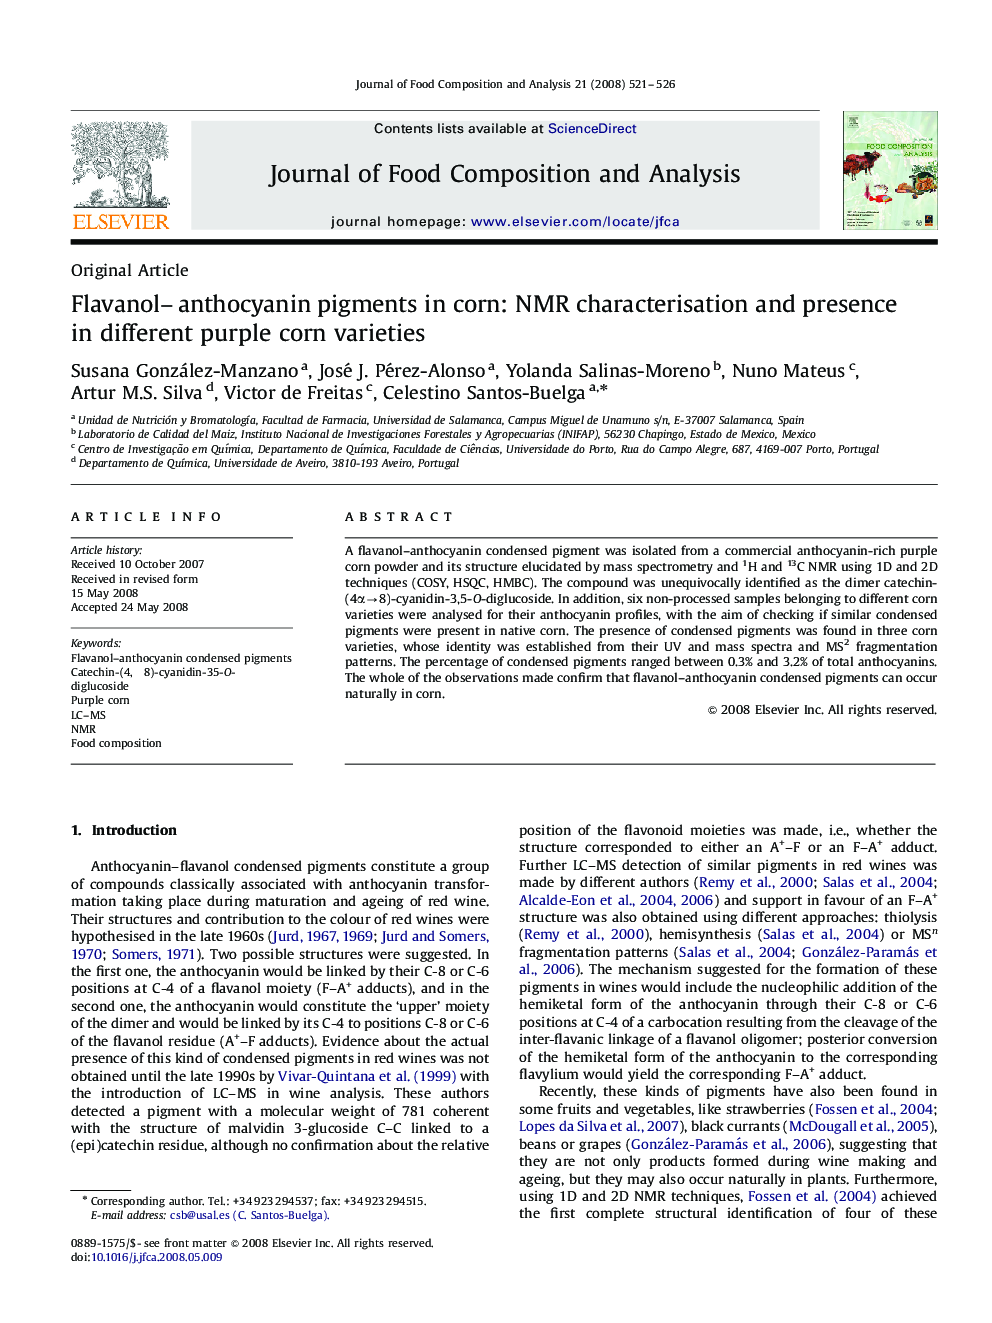 Flavanol–anthocyanin pigments in corn: NMR characterisation and presence in different purple corn varieties